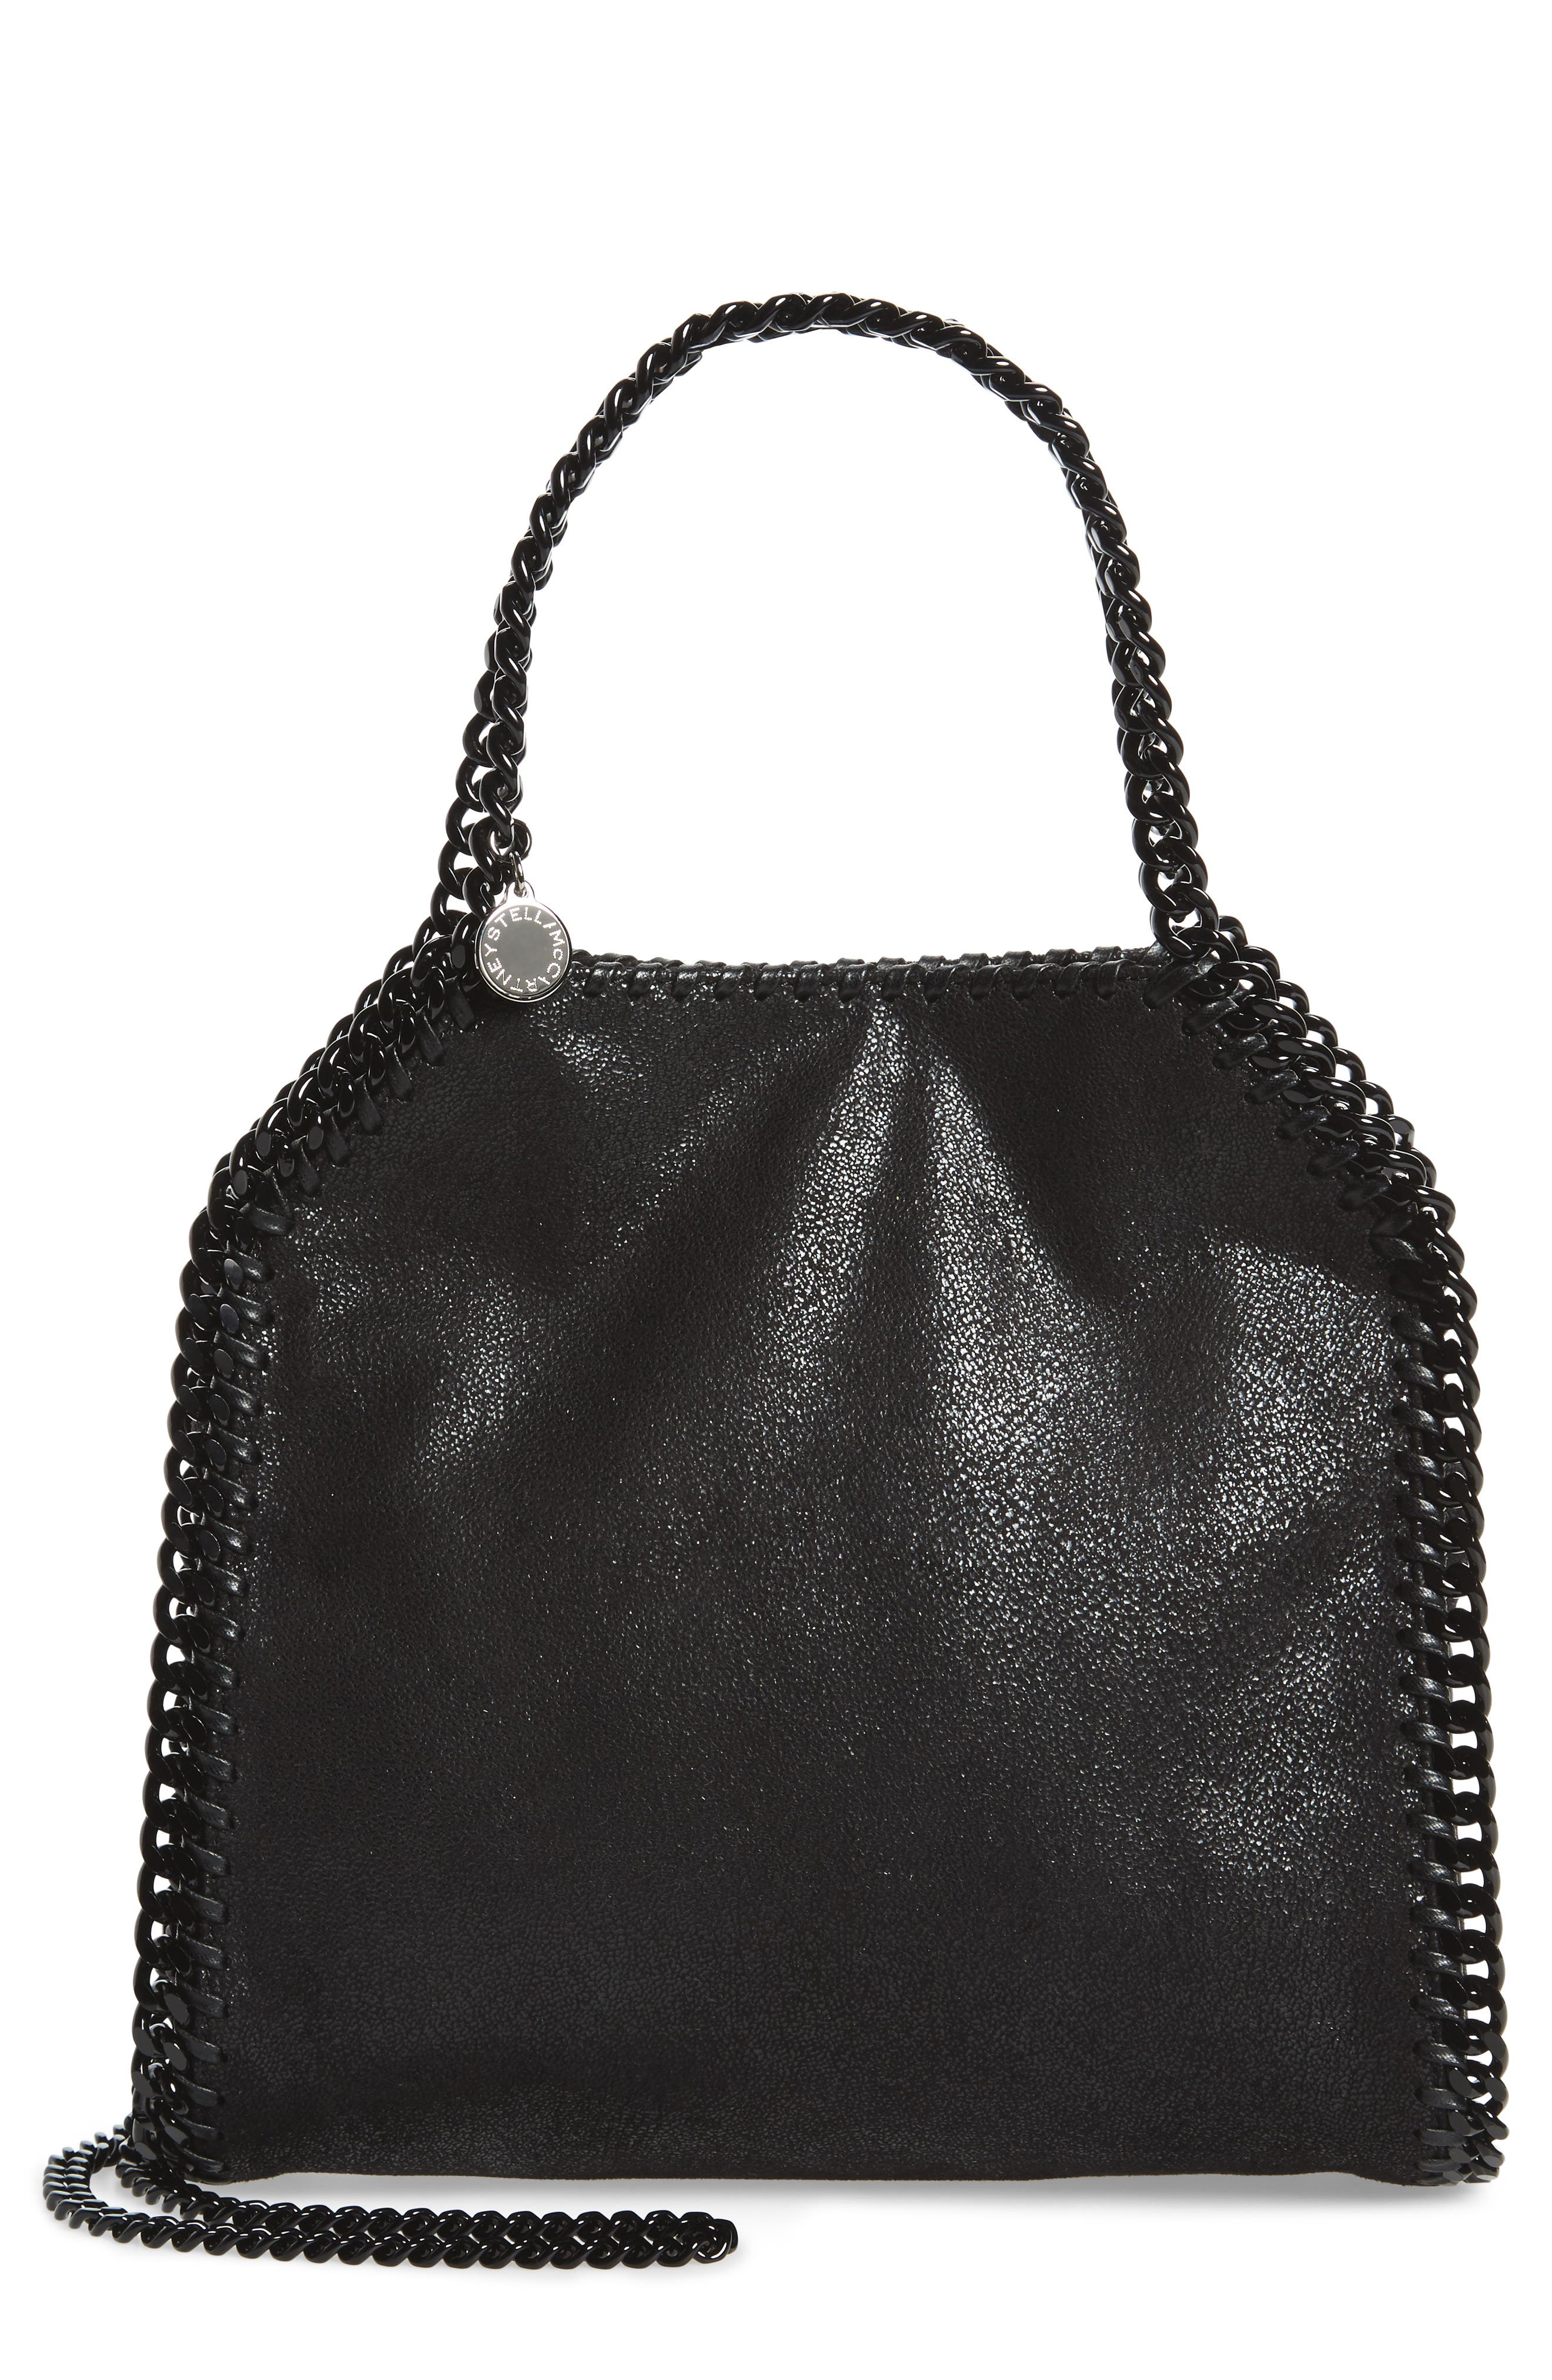 stella mccartney handbags